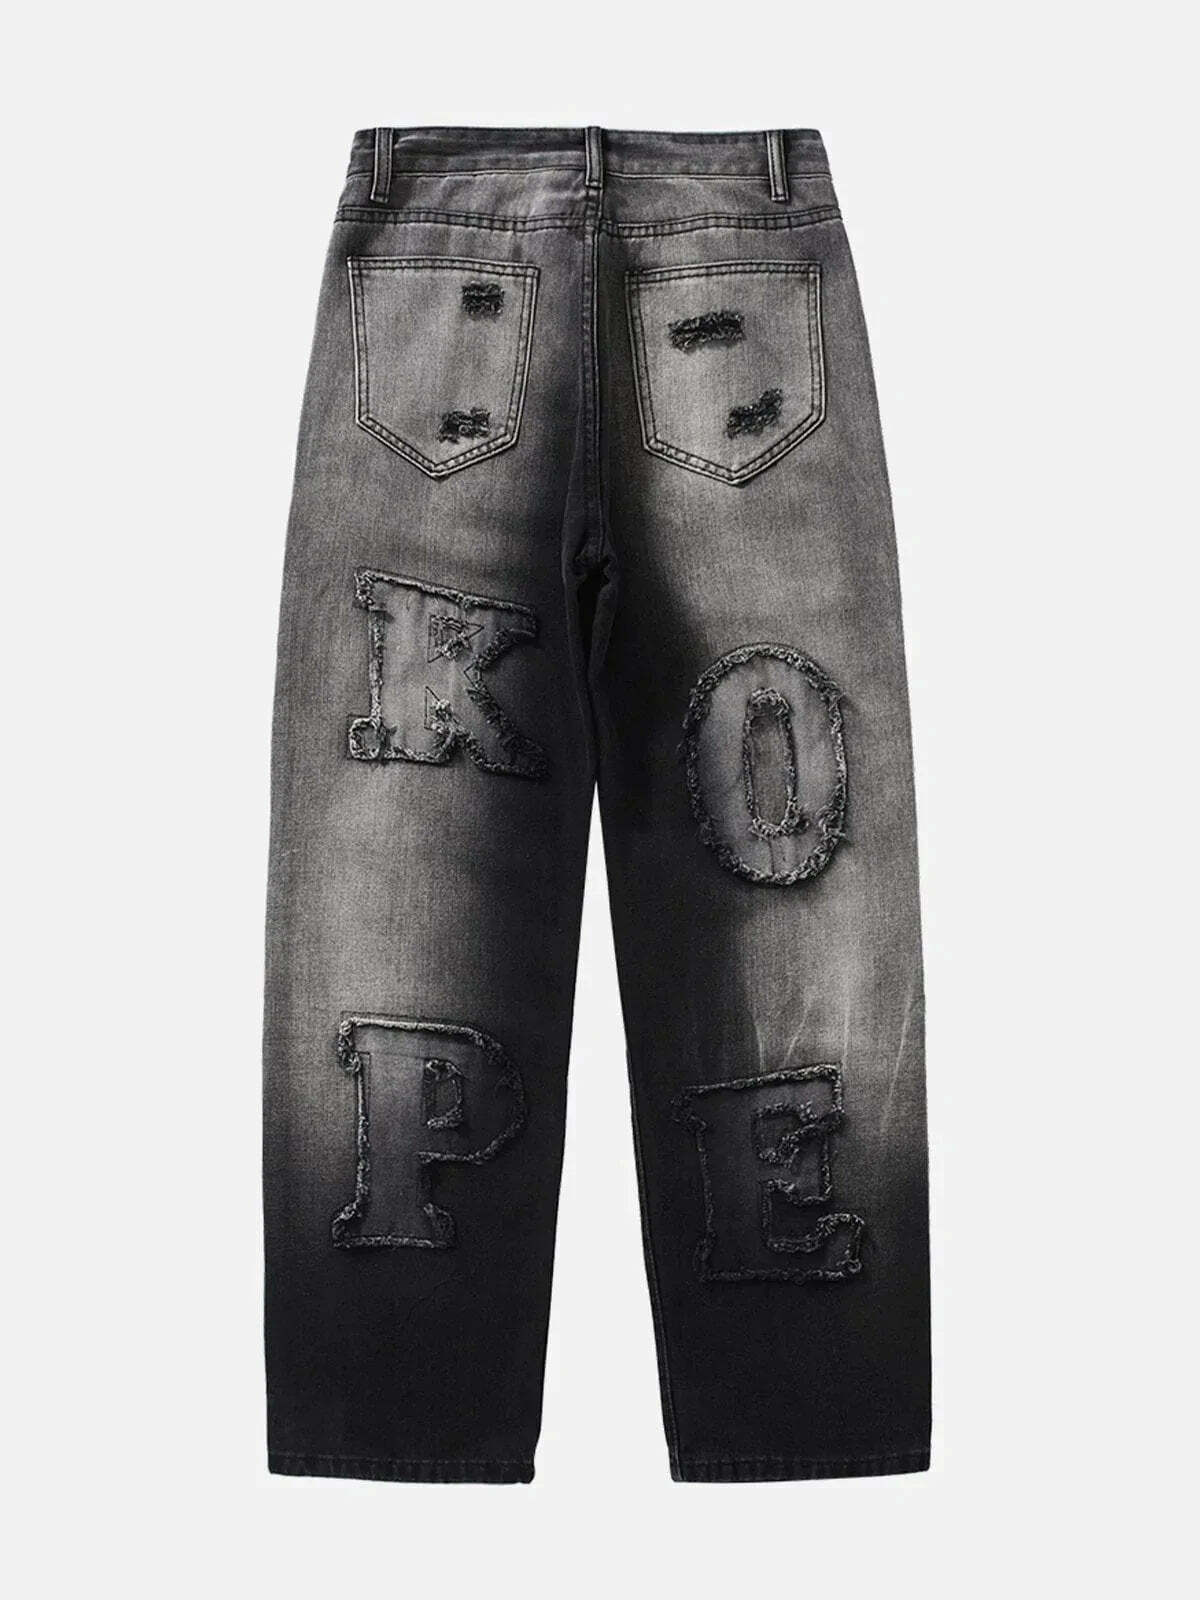 custom letter patch jeans edgy & trendy denim 6149